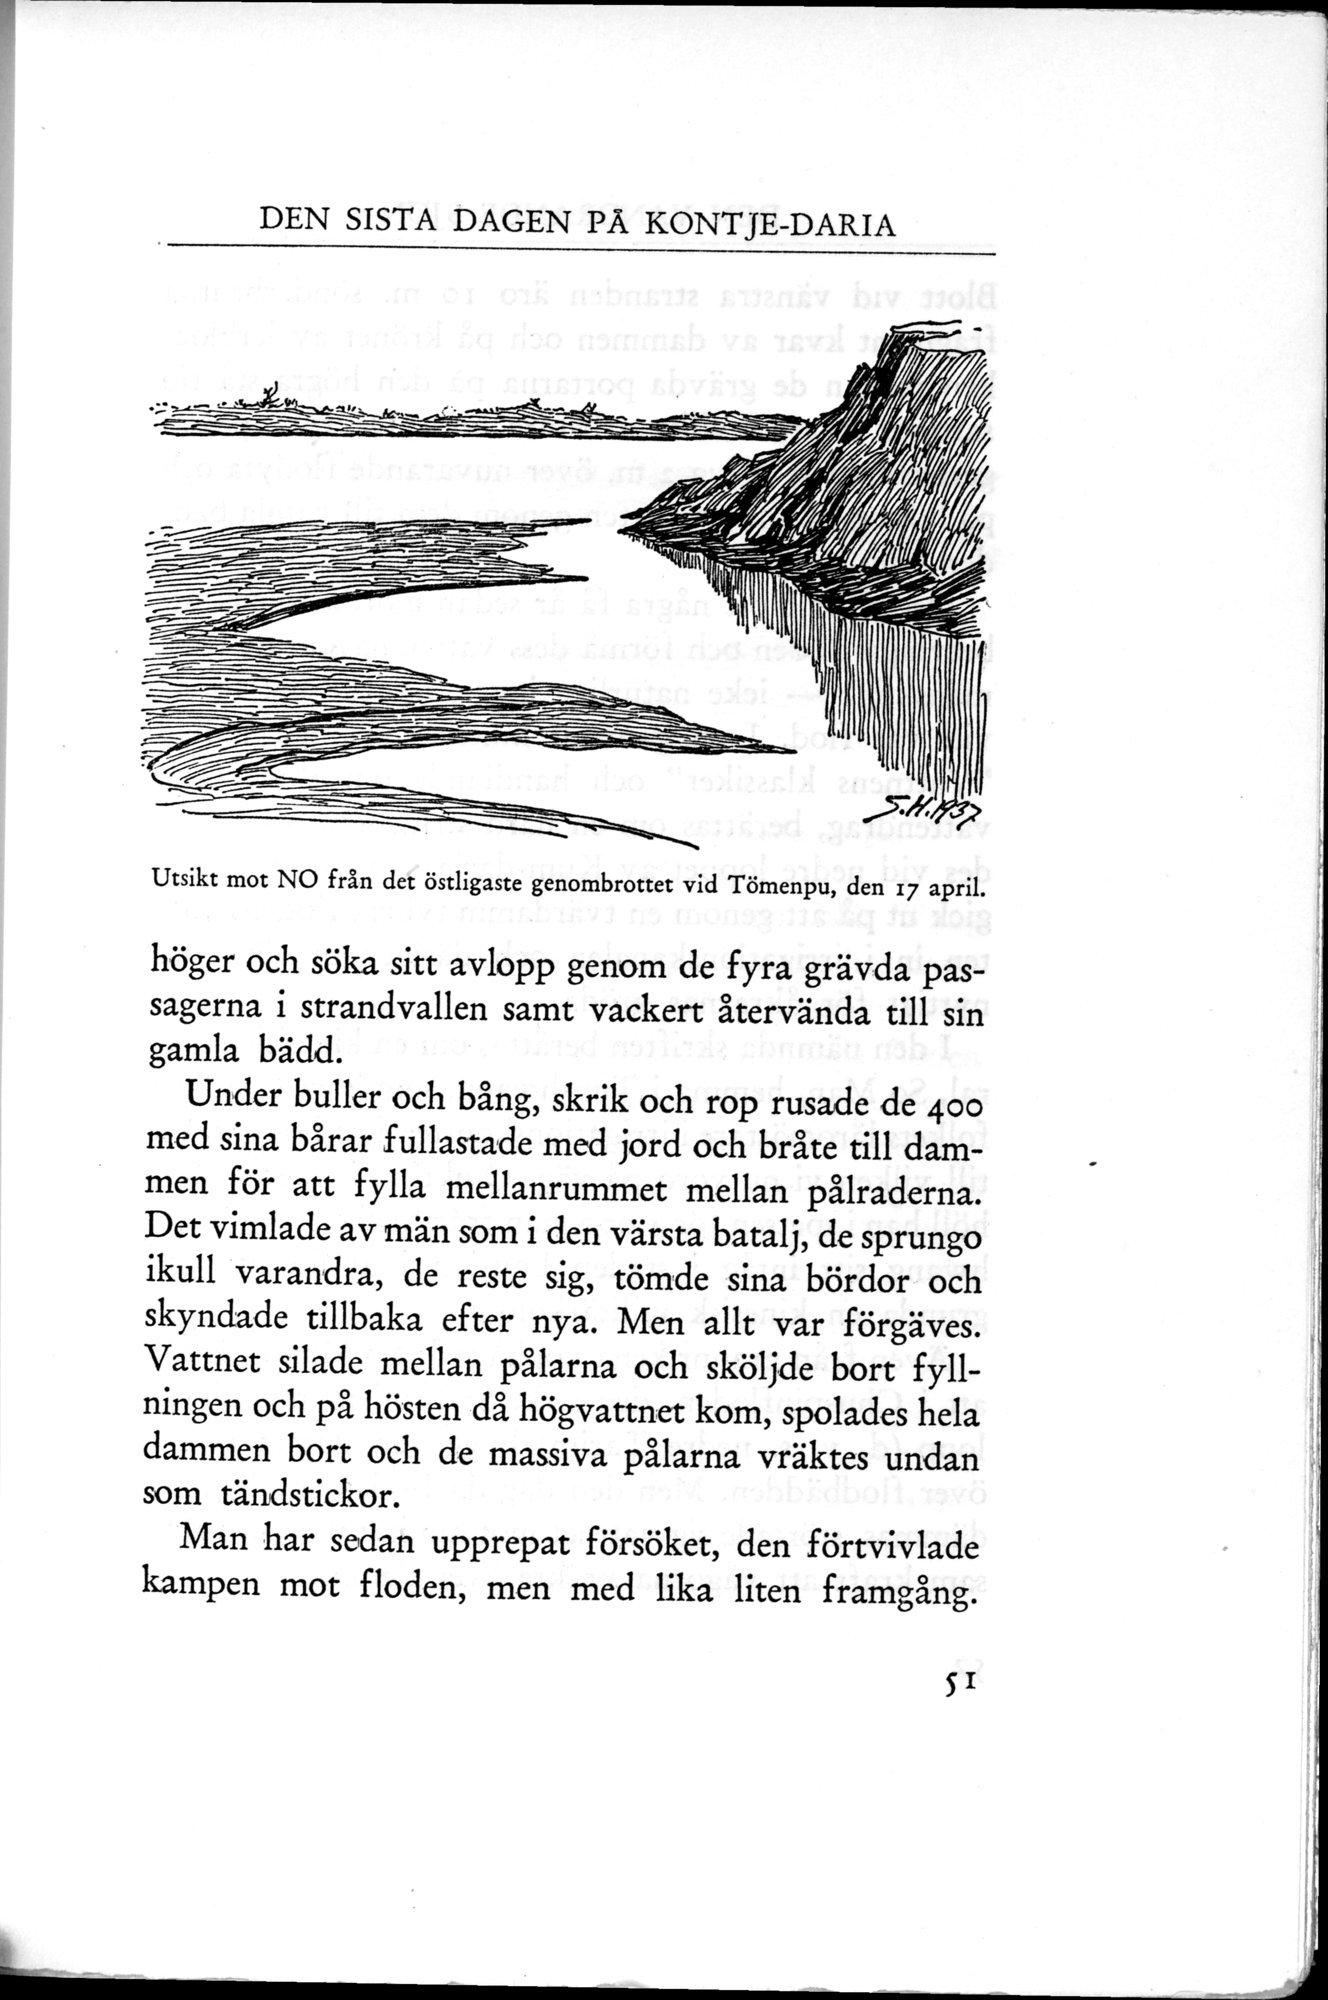 Den Vandrande Sjön : vol.1 / Page 81 (Grayscale High Resolution Image)